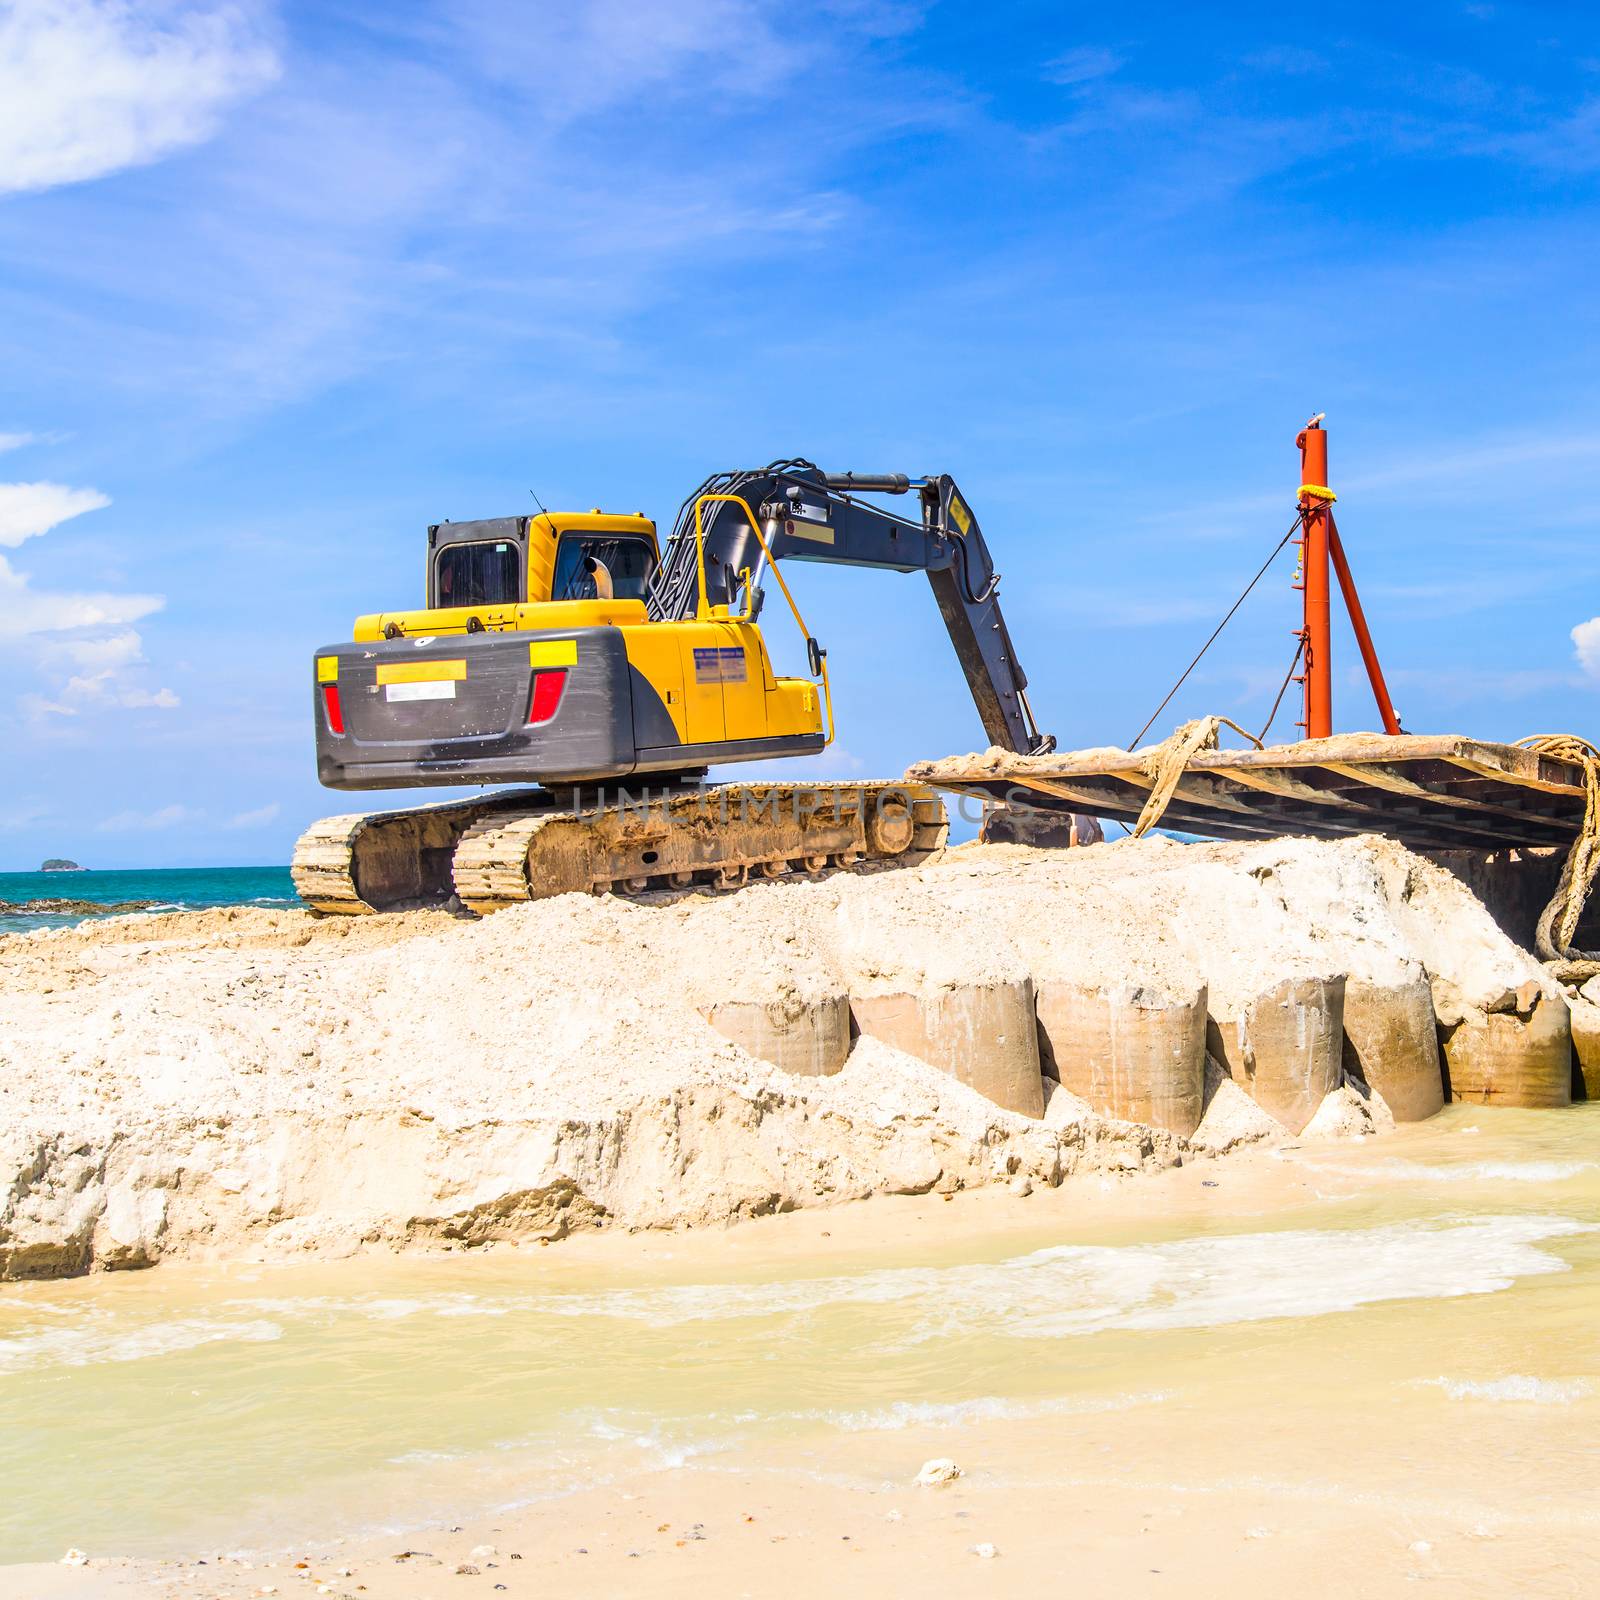 bulldozer working on a beach  by jakgree